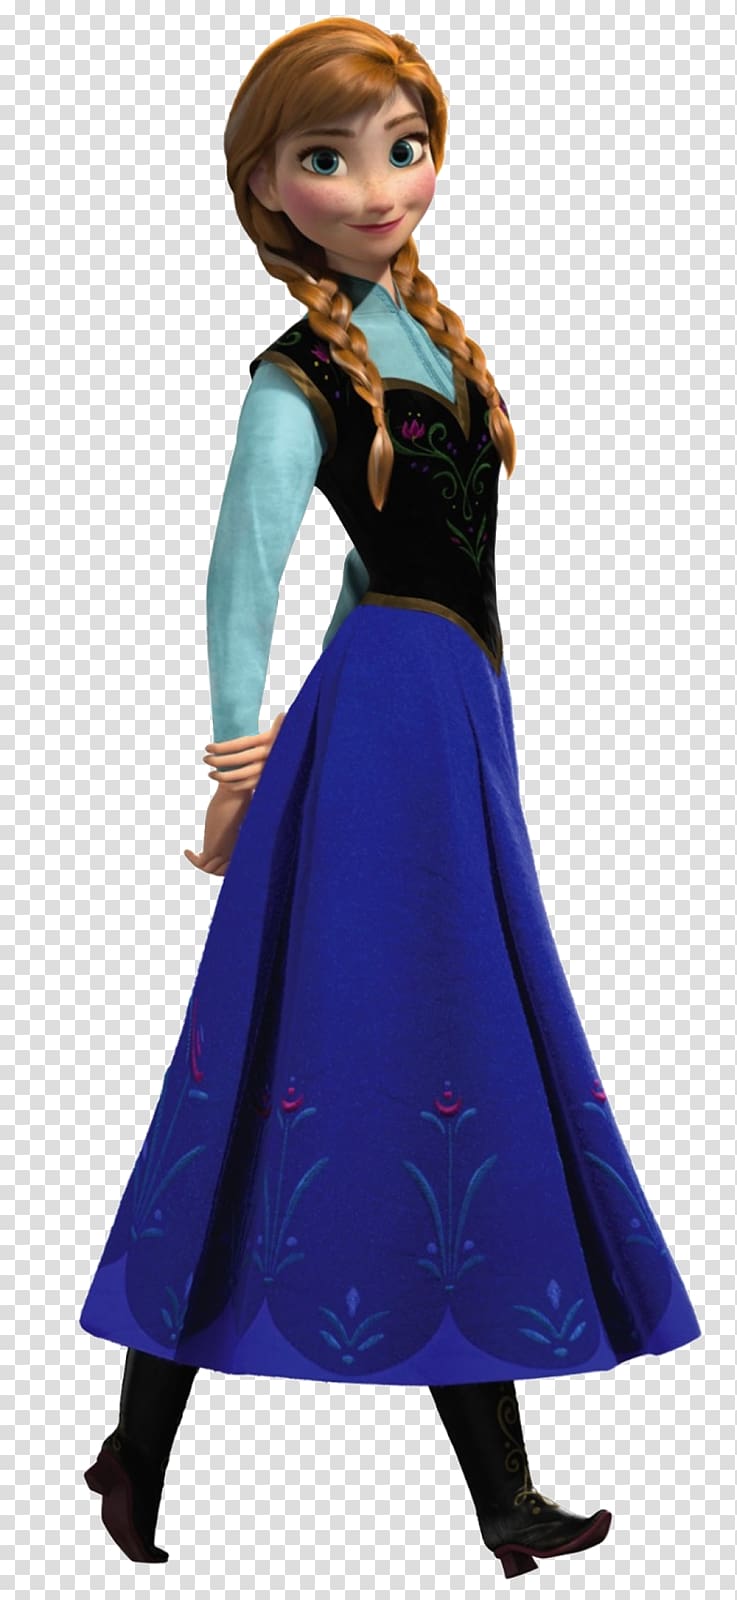 Disney Frozen Anna, Elsa Kristoff Anna Frozen Olaf, elsa transparent background PNG clipart